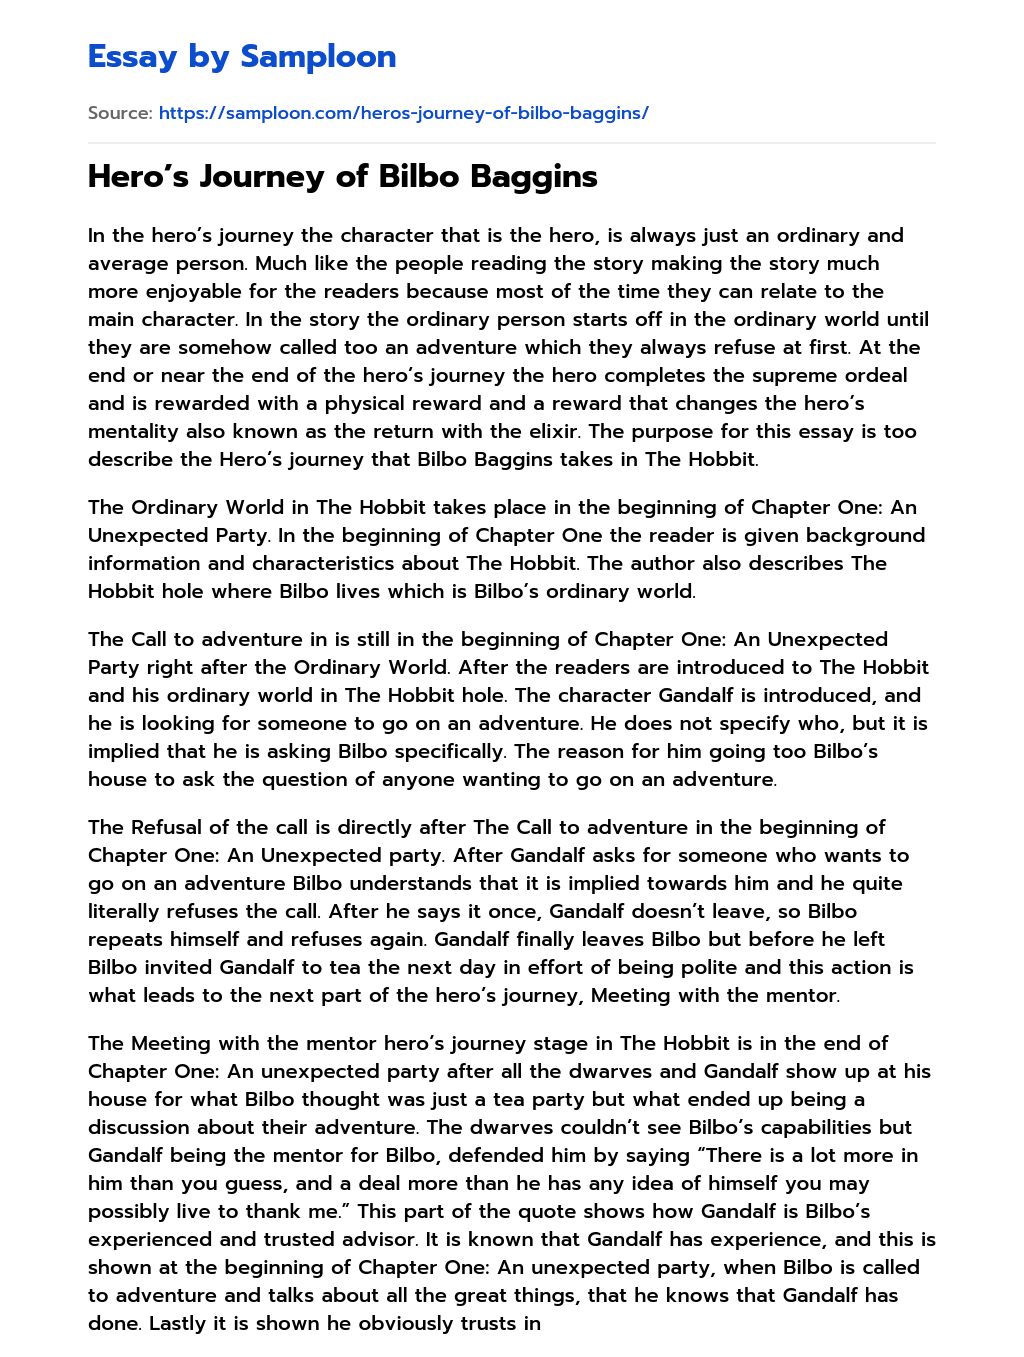 Hero’s Journey of Bilbo Baggins essay